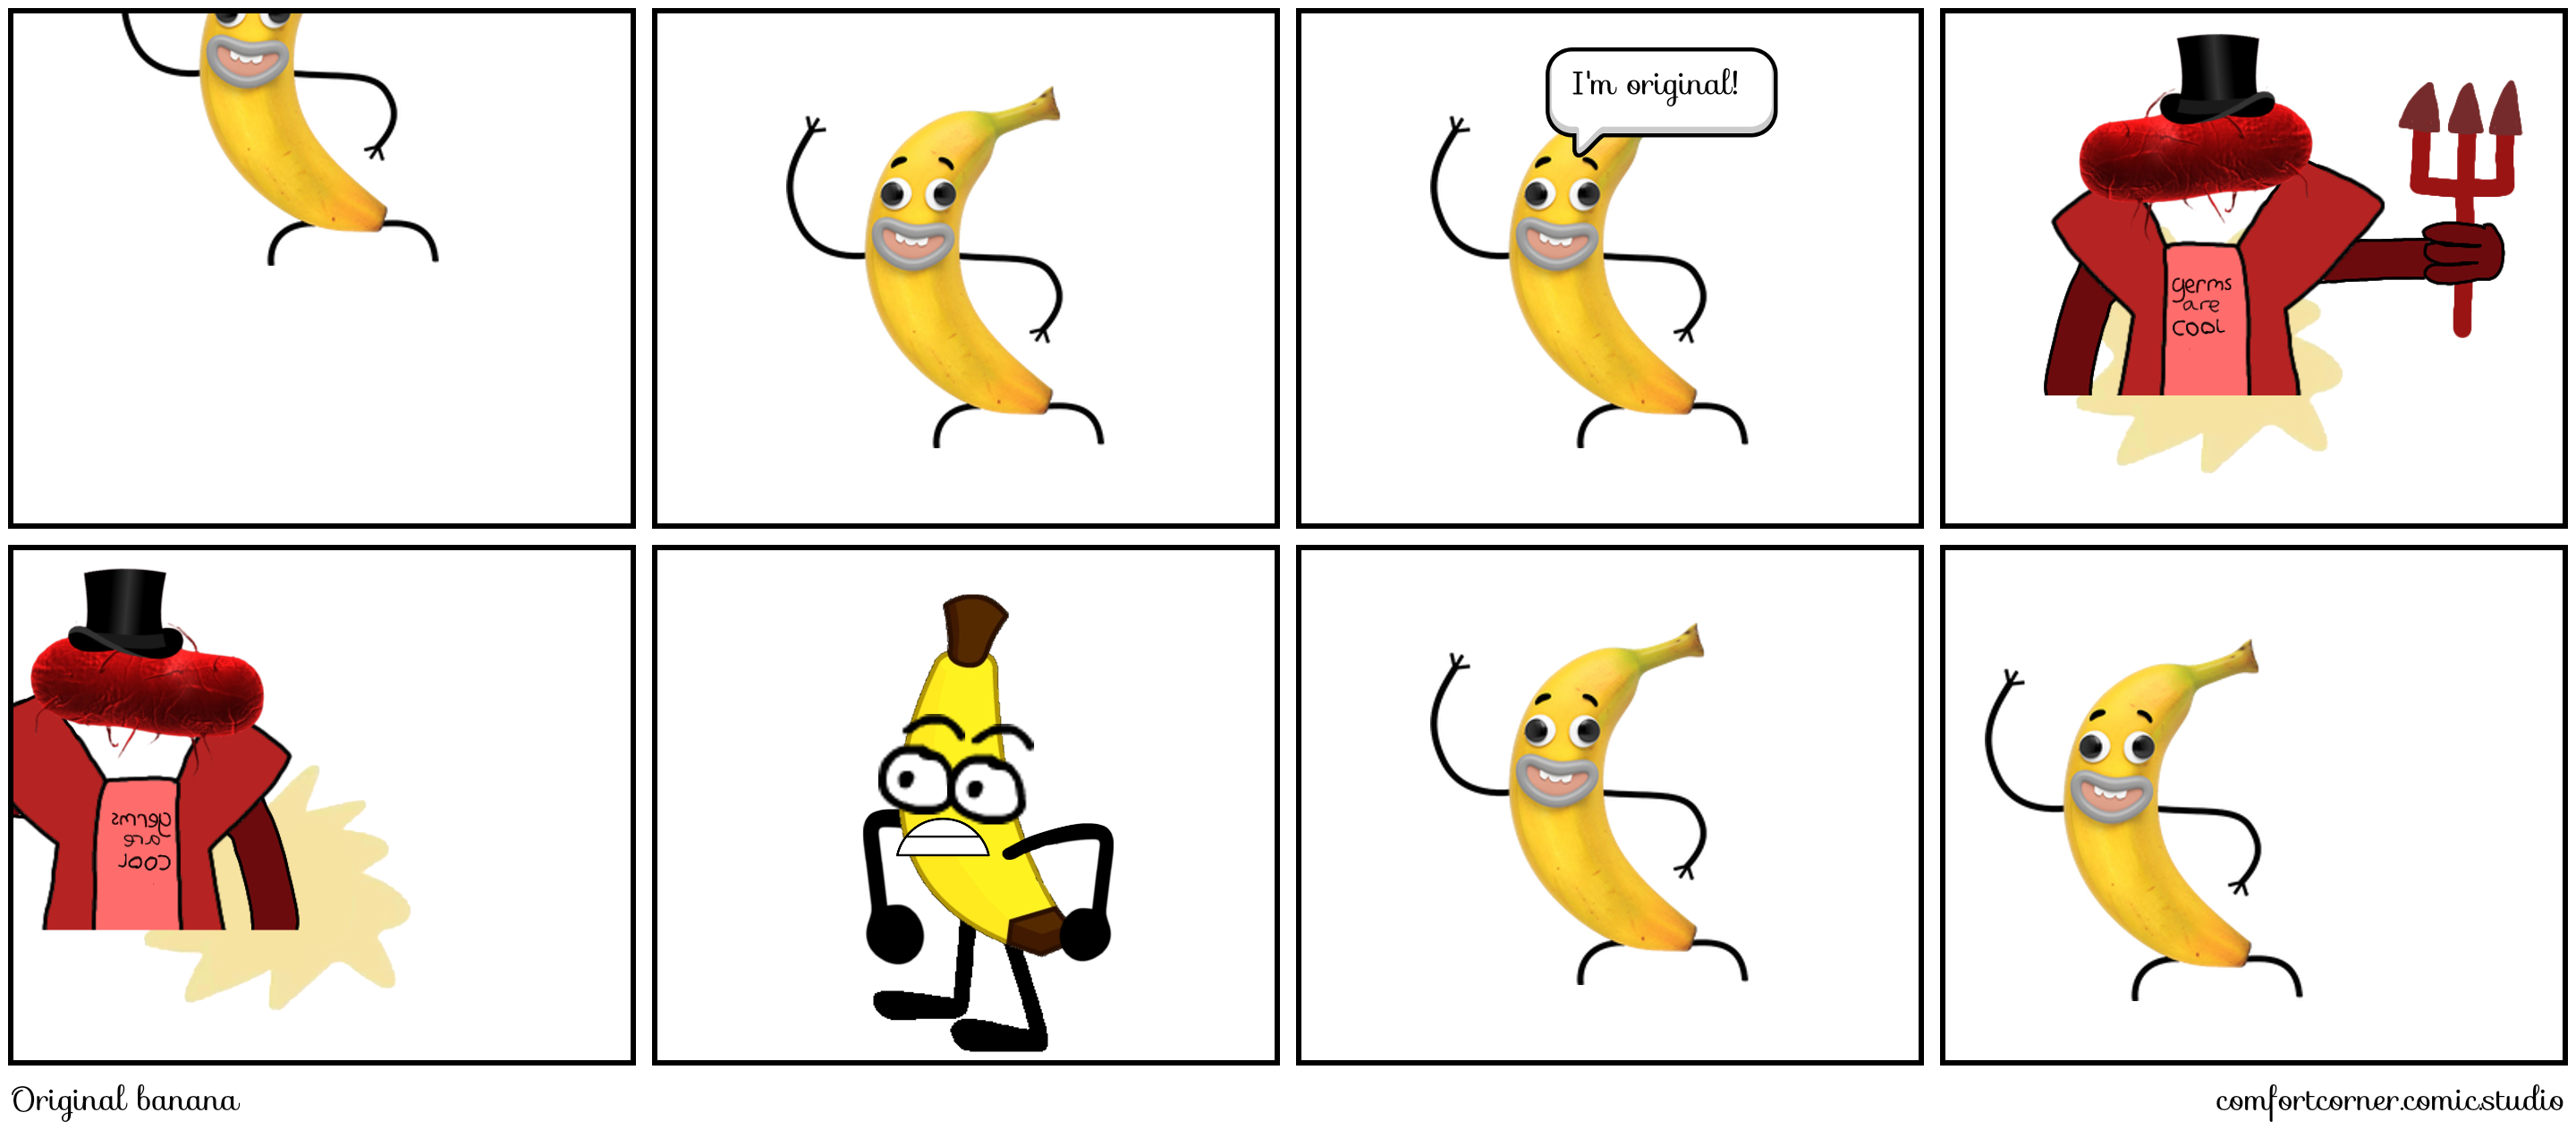 Original banana